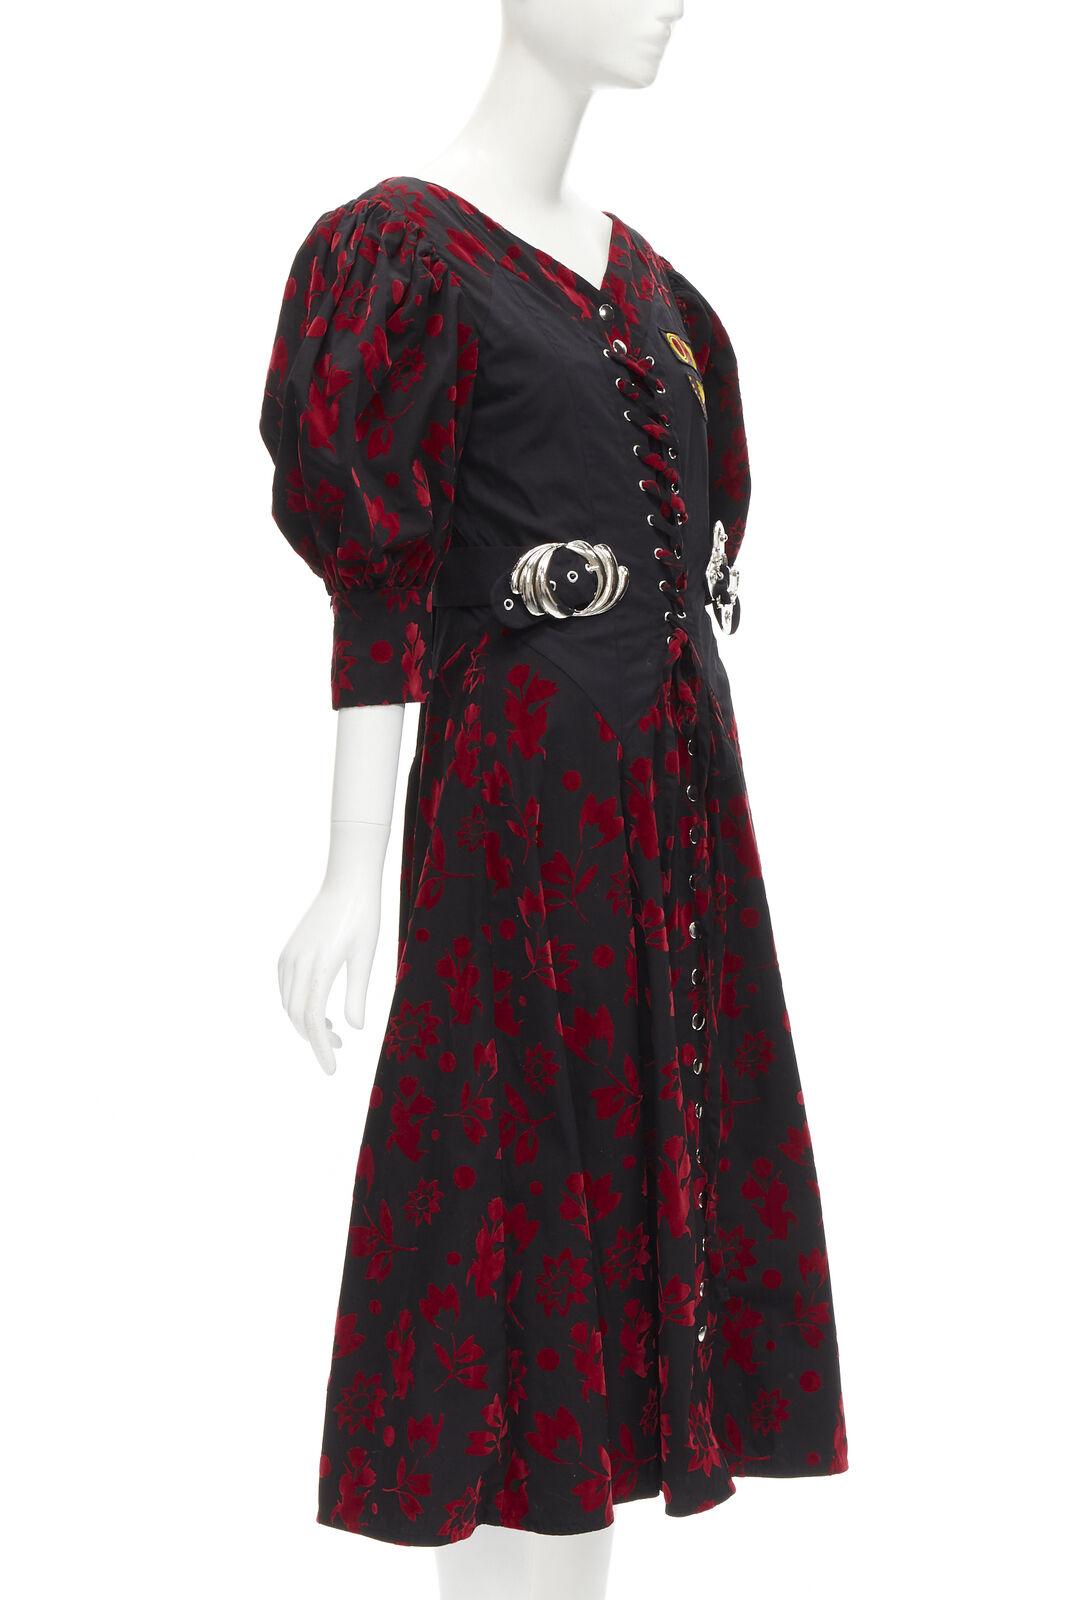 Black CHOPOVA LOWENA red velvet floral butterfly hook black corset Victorian dress S For Sale